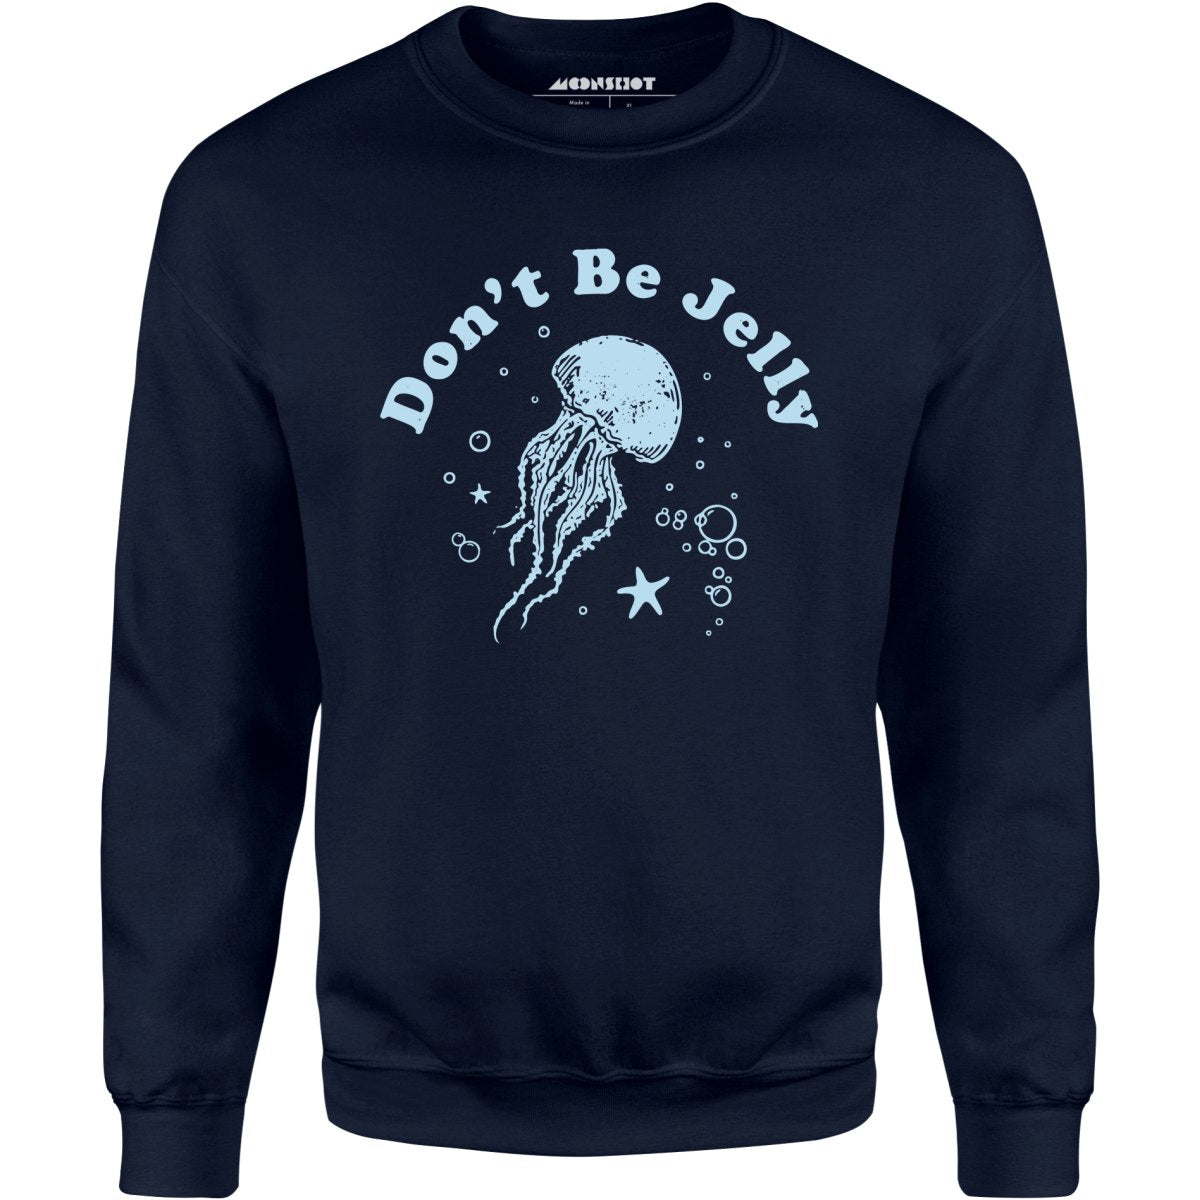 Don't Be Jelly - Unisex Sweatshirt